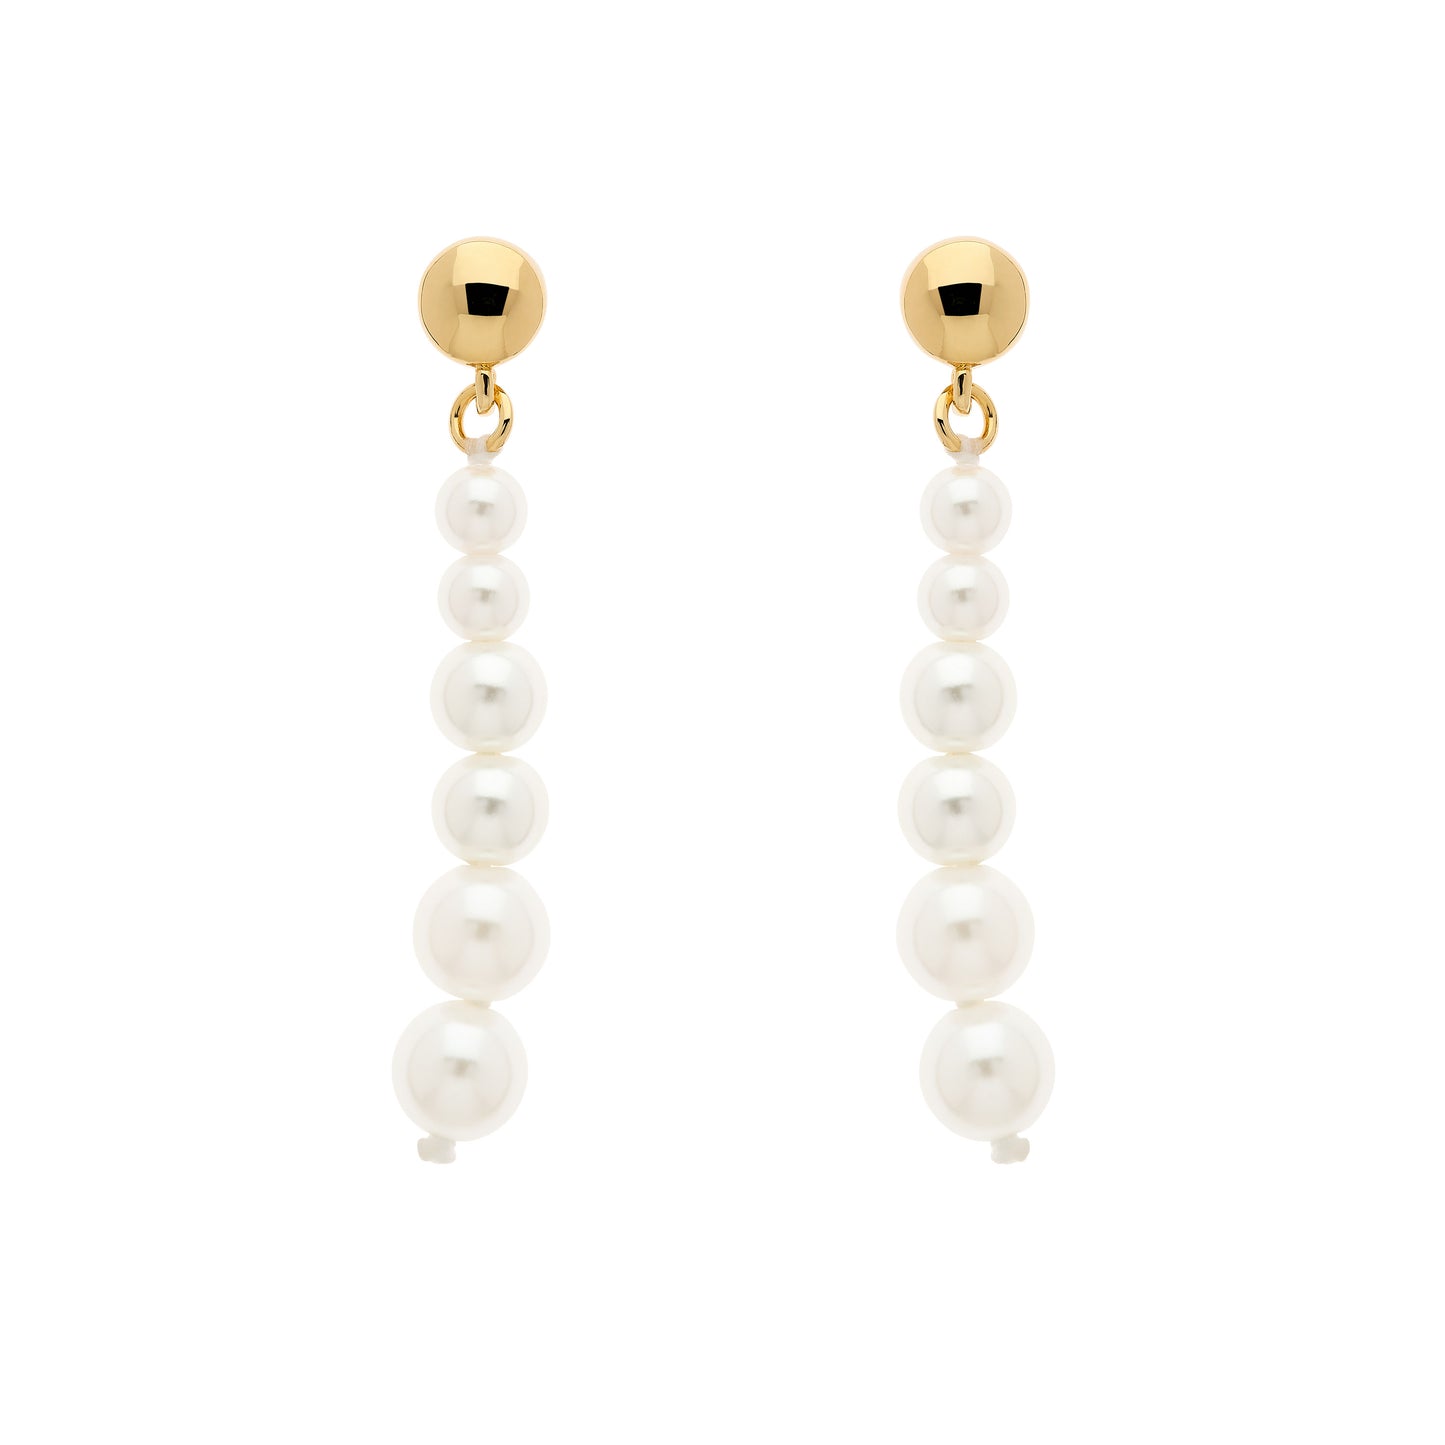 Graduated Pearl & Gold Earrings